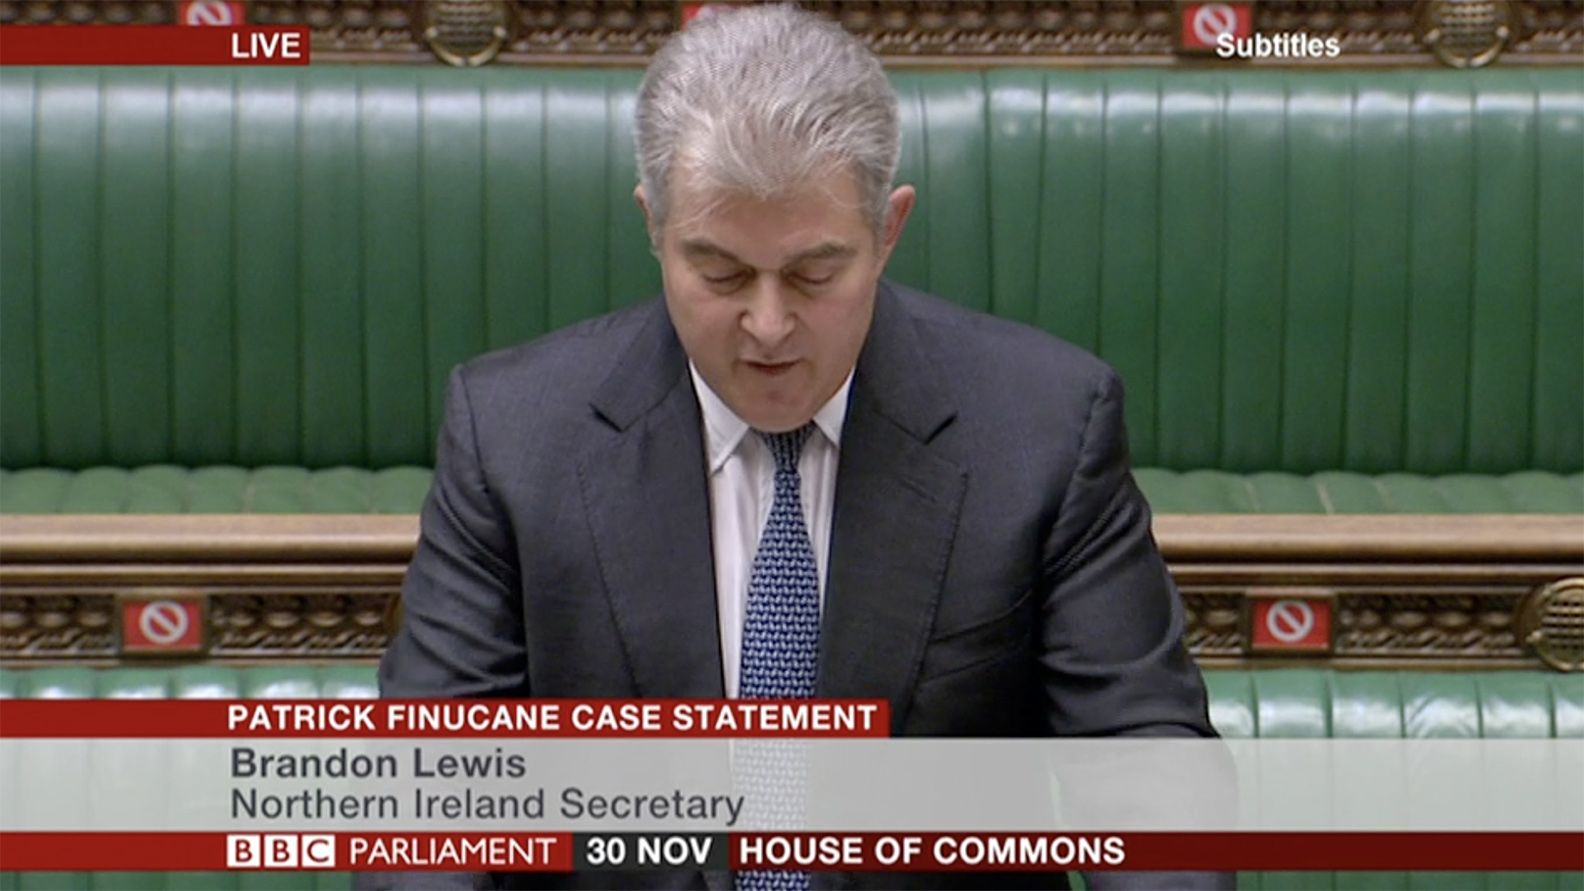 ANNOUNCEMENT: Brandon Lewis announces in the House of Commons the Pat Finucane decision